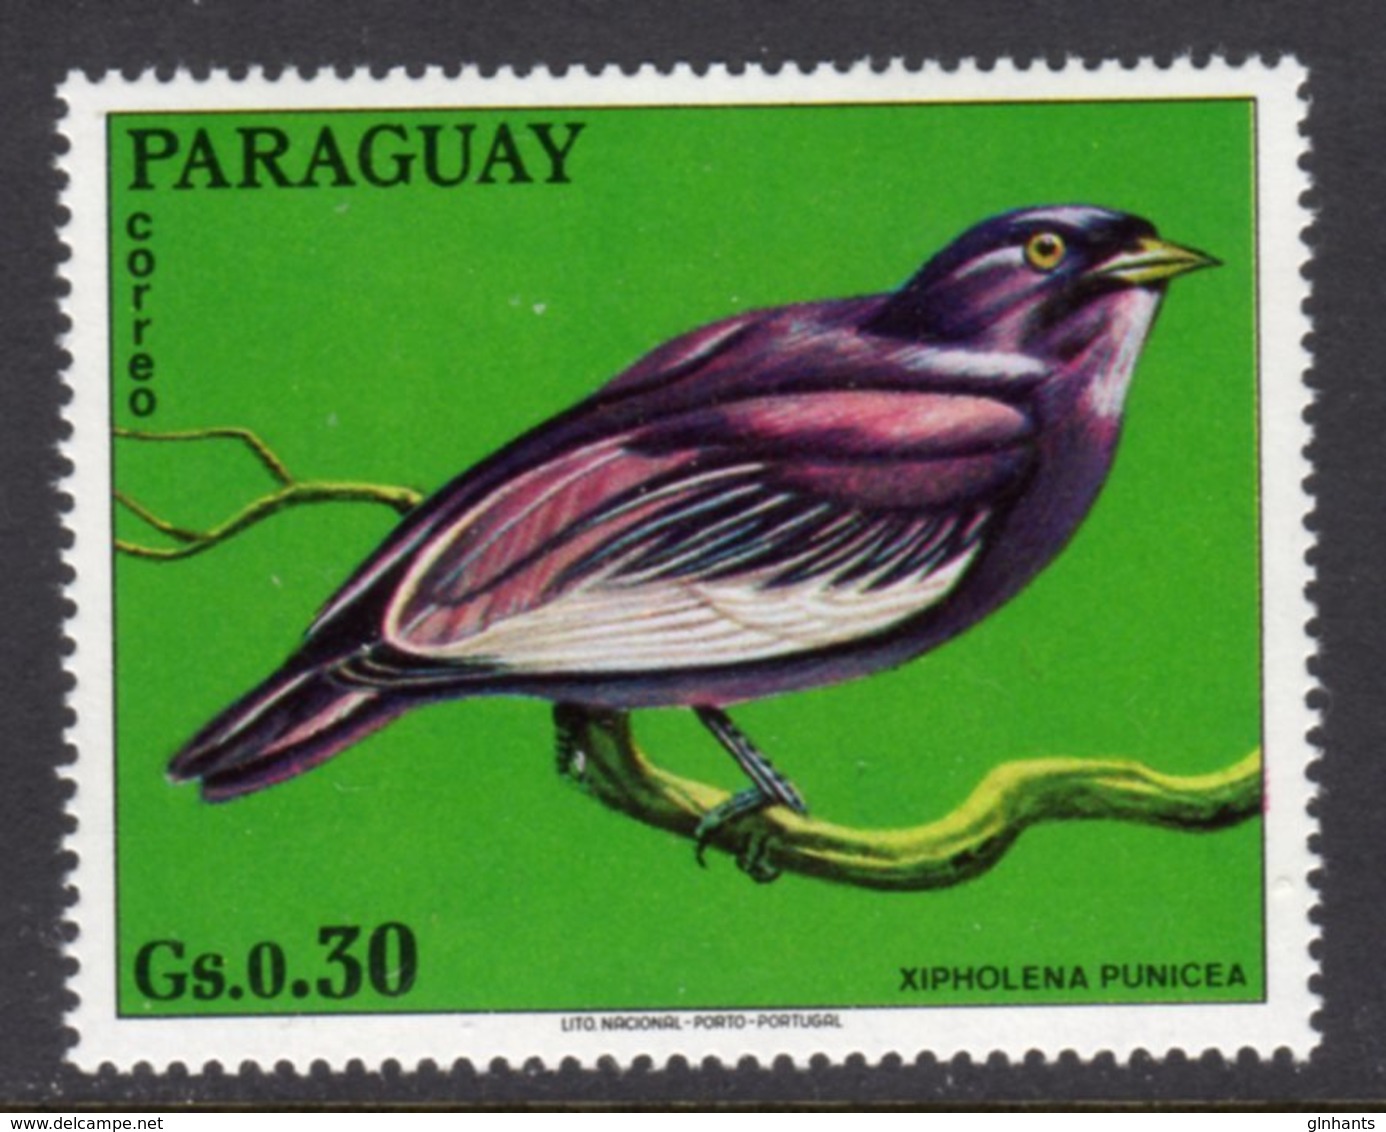 PARAGUAY - 1973 30c WILDLIFE BIRD STAMP FINE MNH ** Mi 2492 - Paraguay